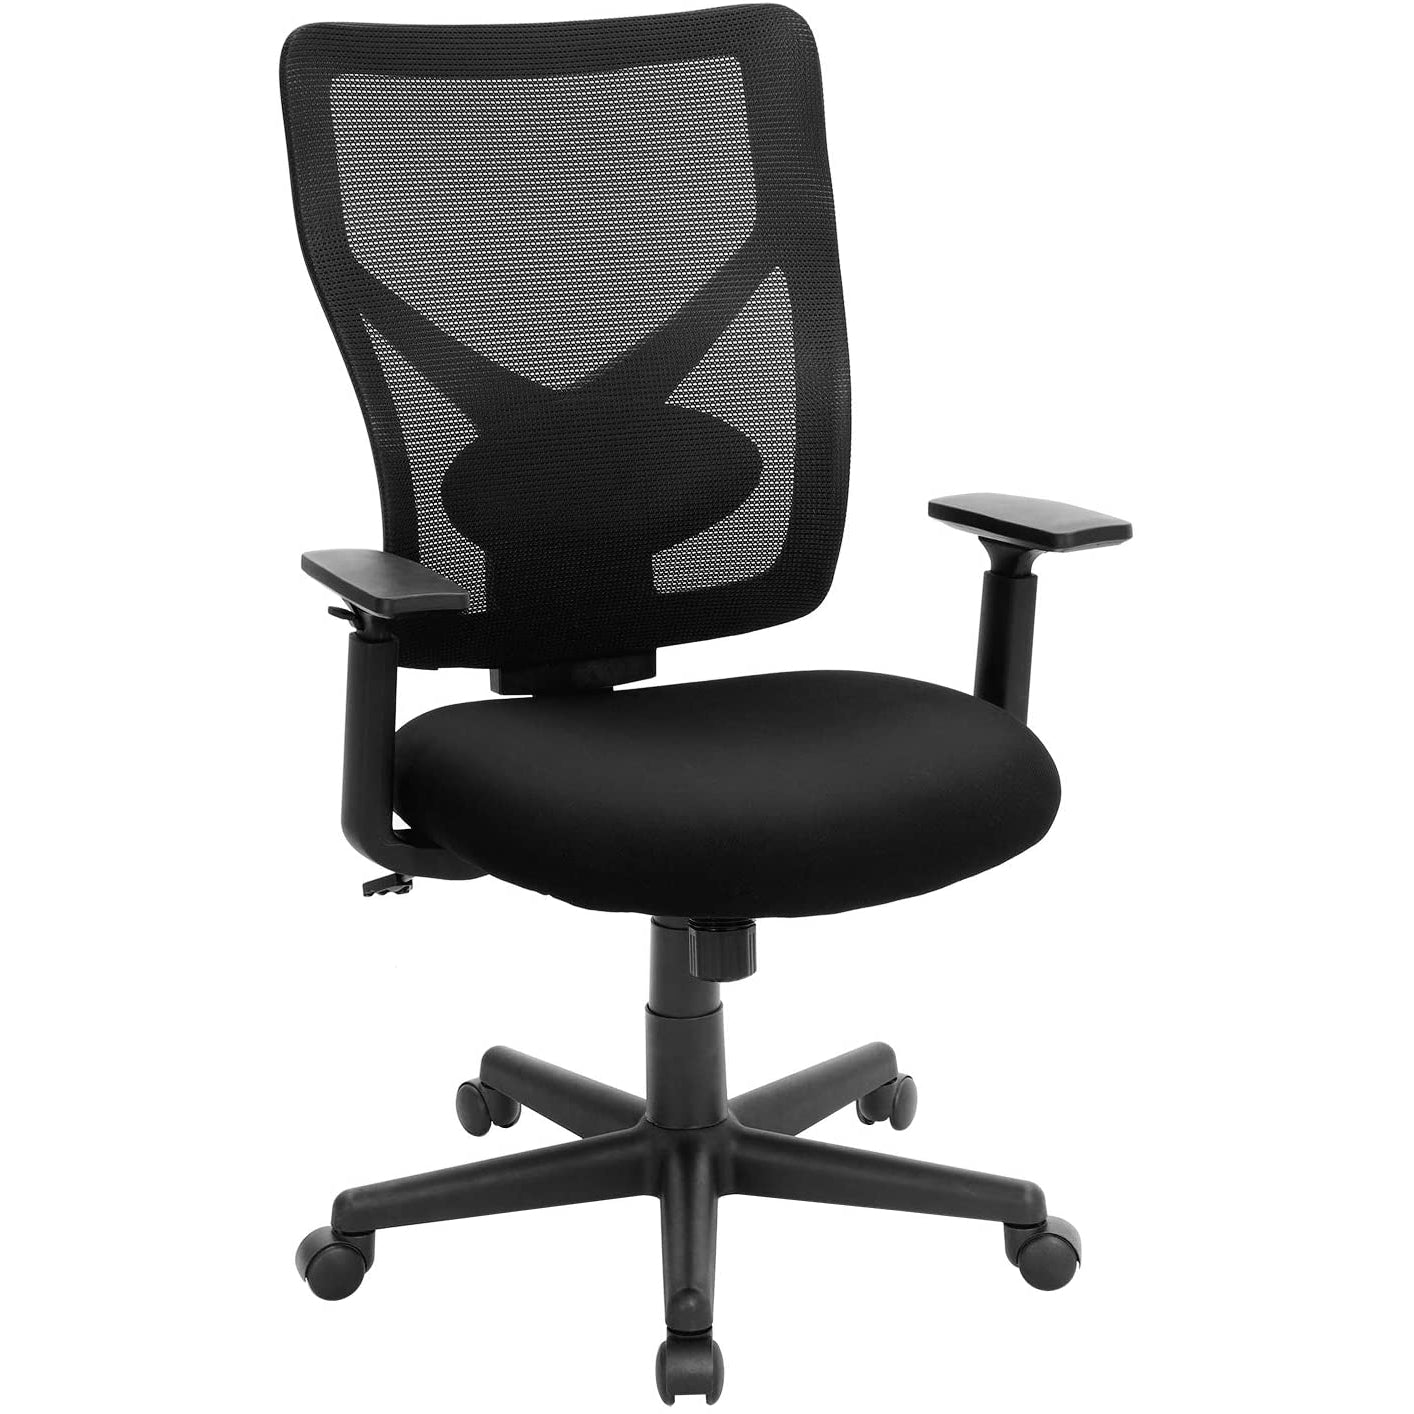 Nancy's Bristol Office Chair - Office Chair - Ergonomic Computer Chair - Black